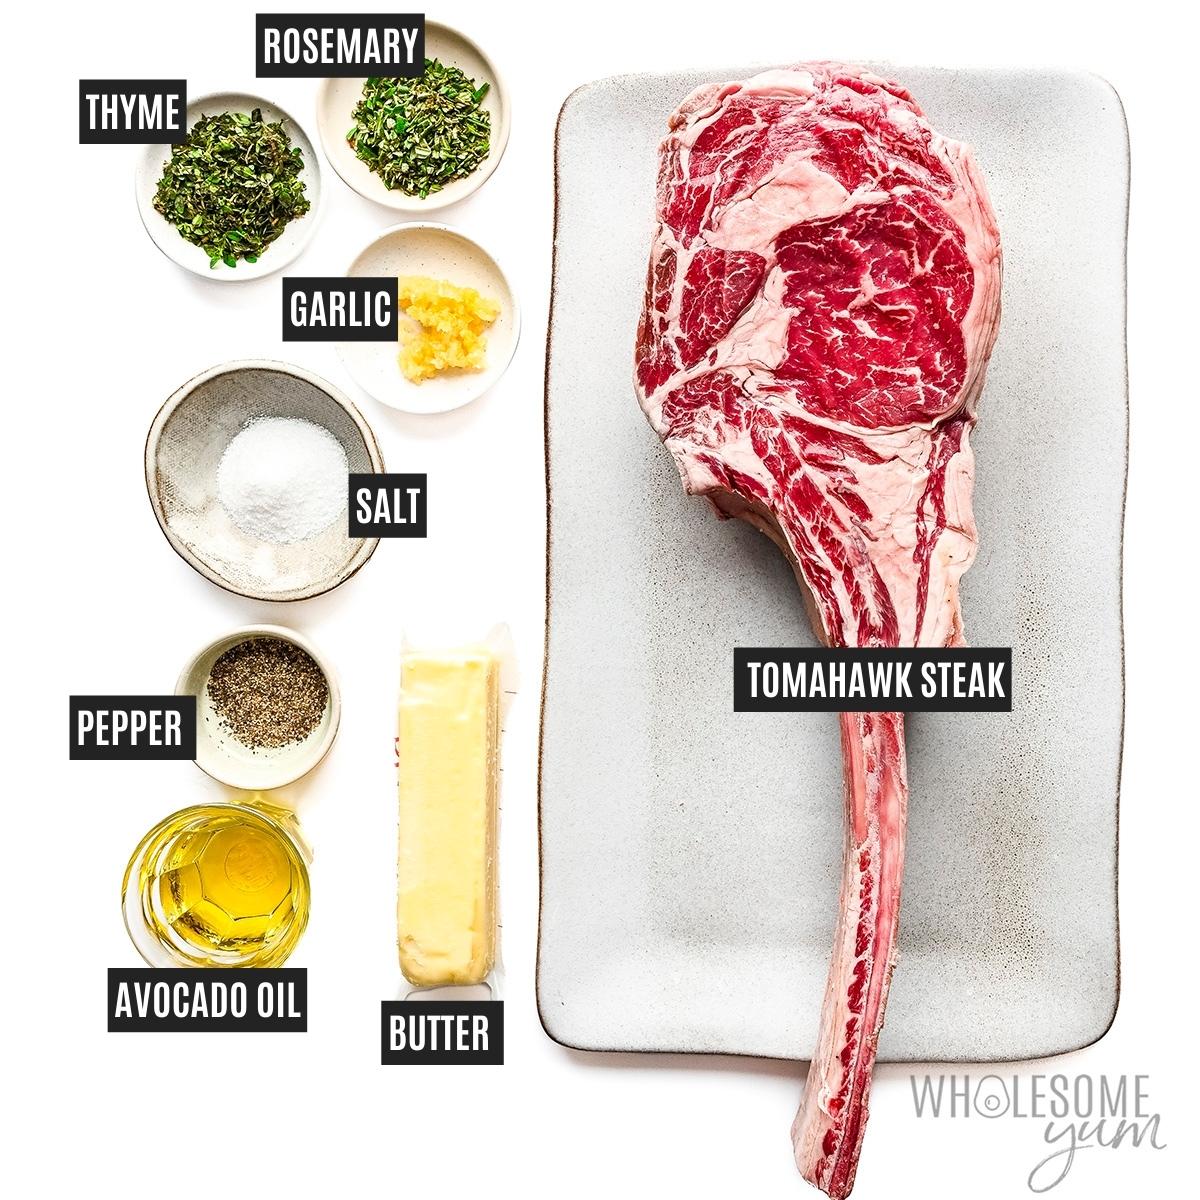 Tomahawk steak recipe ingredients.